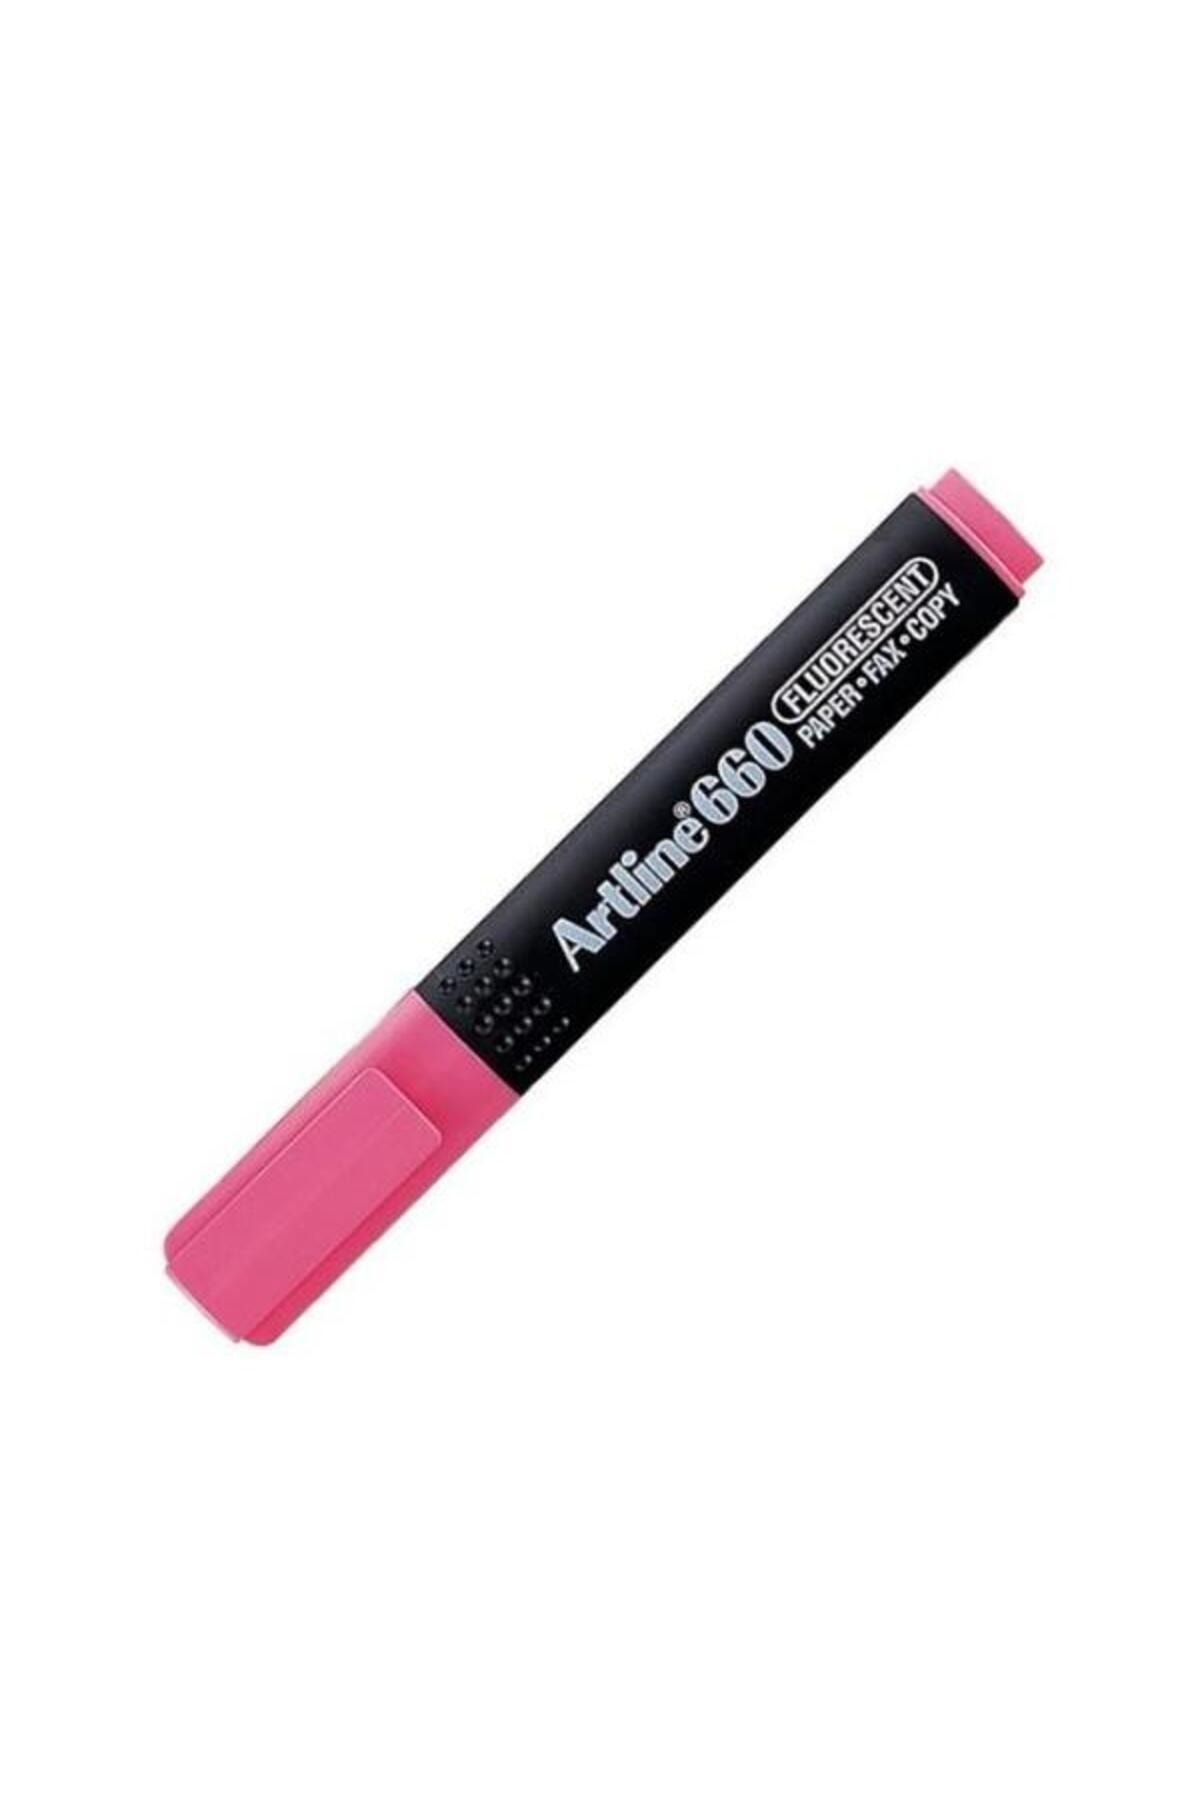 artline Fosforlu Kalem Kesik Uç 1,0 4,0 Mm Pastel Pink 660 12'li Paket / Artline